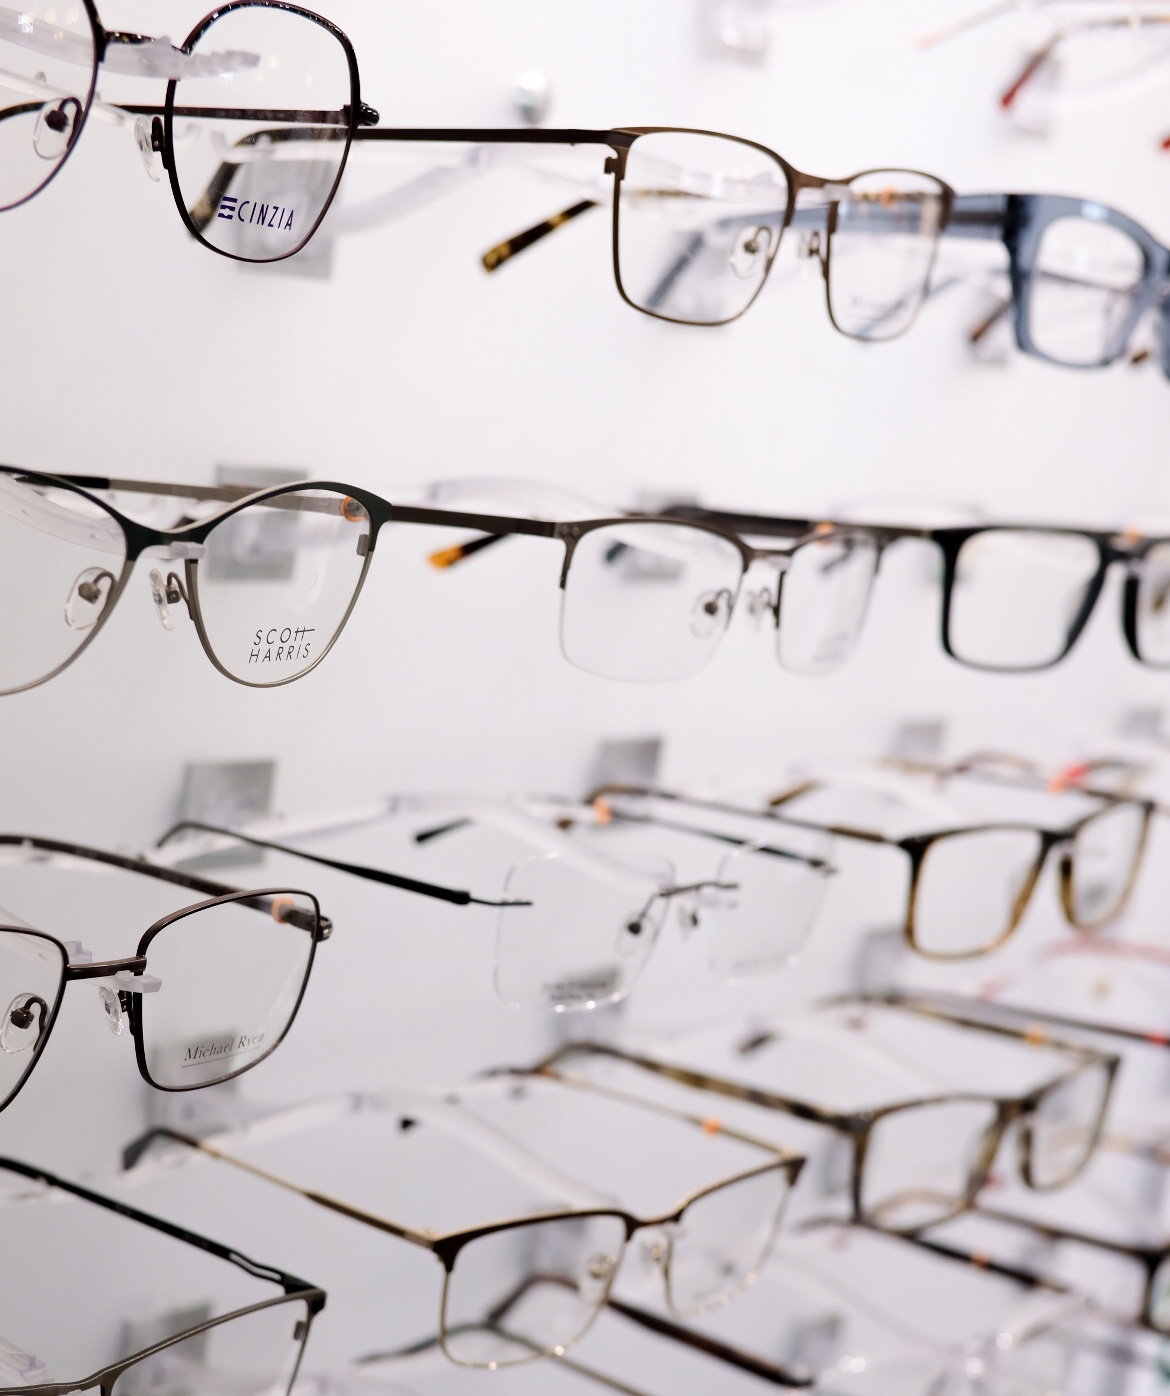 Decorative image of eye glass frames